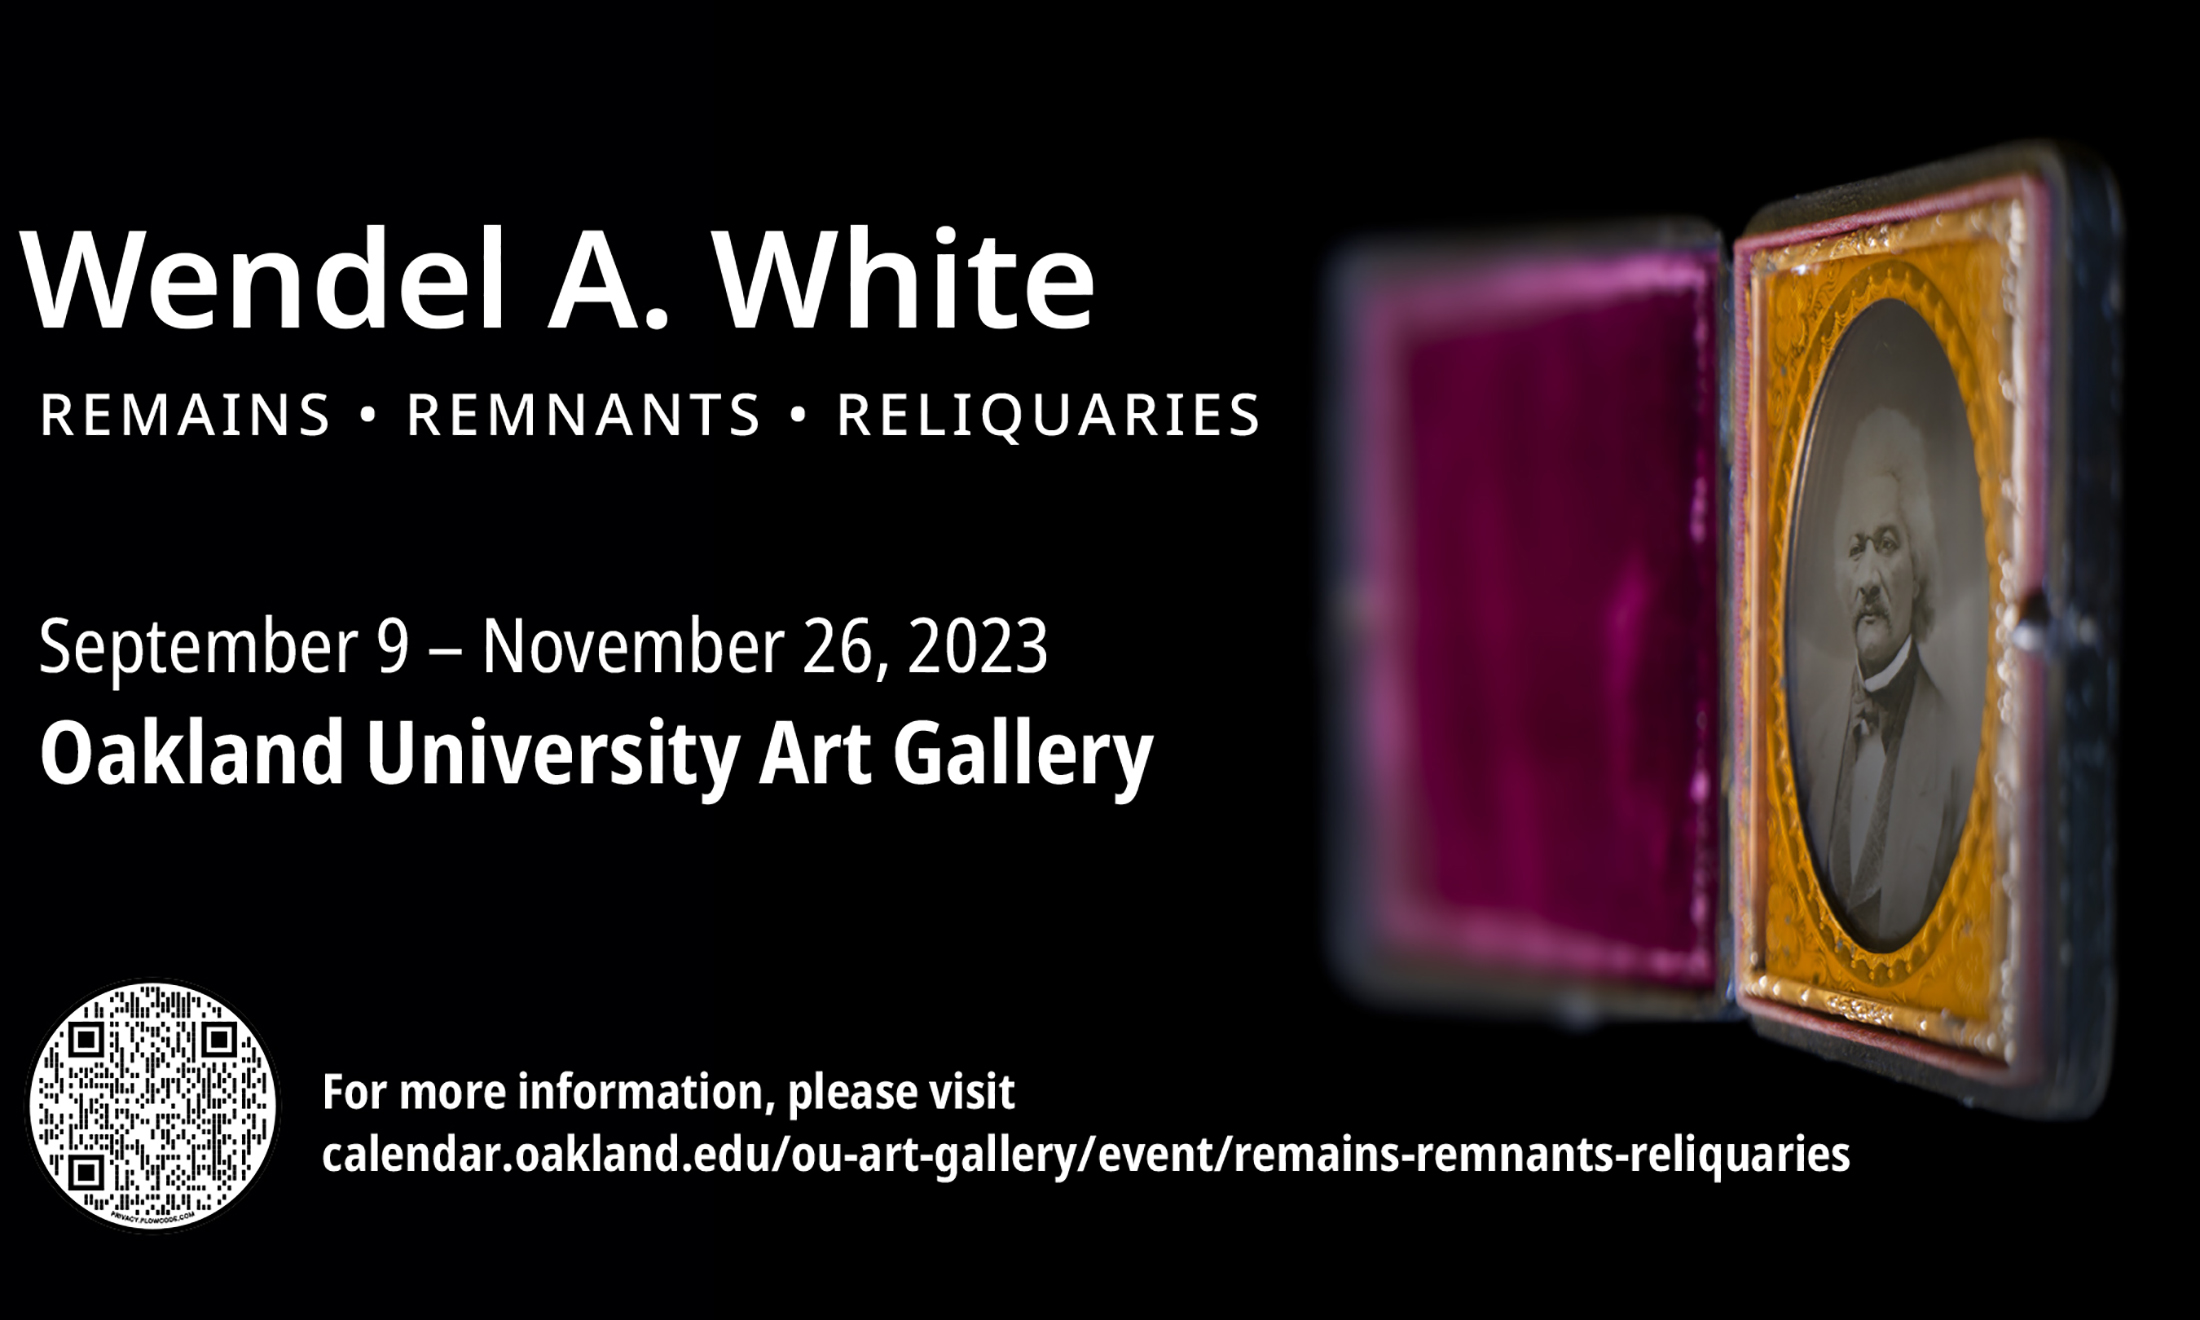 Wendel A. White: Remains • Remnants • Reliquaries exhibition